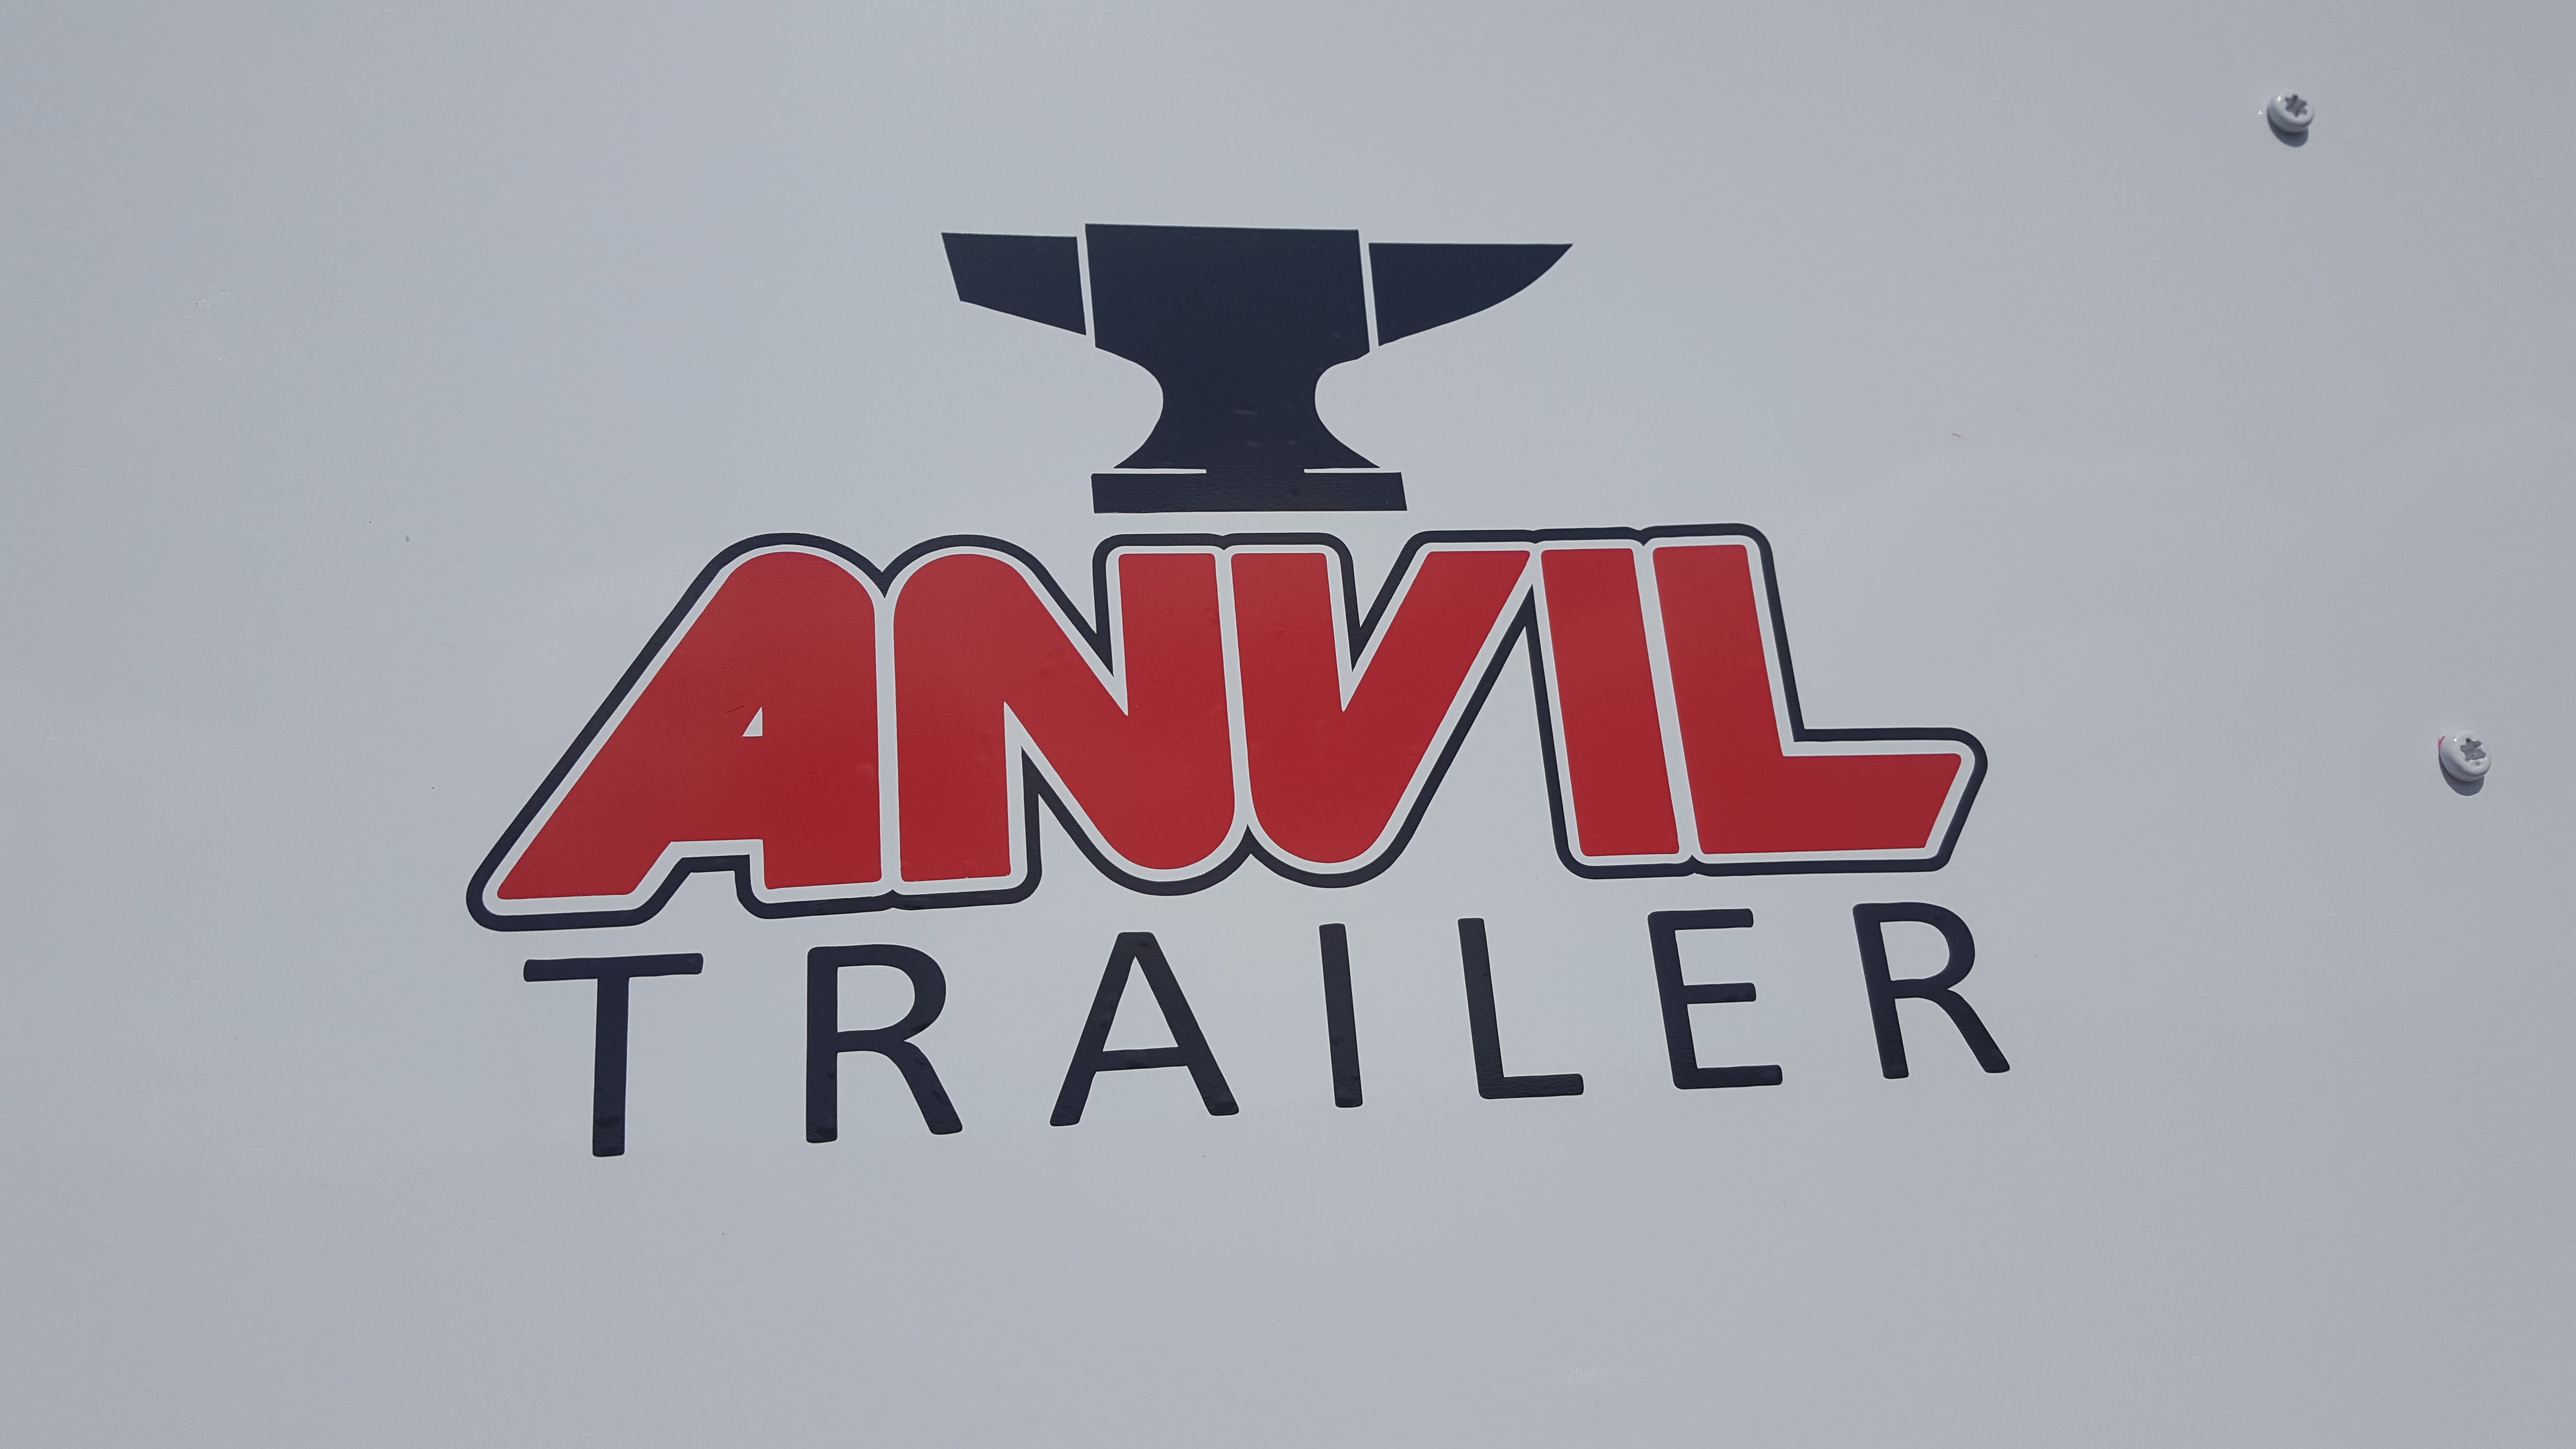 anvil trailer dealers near me